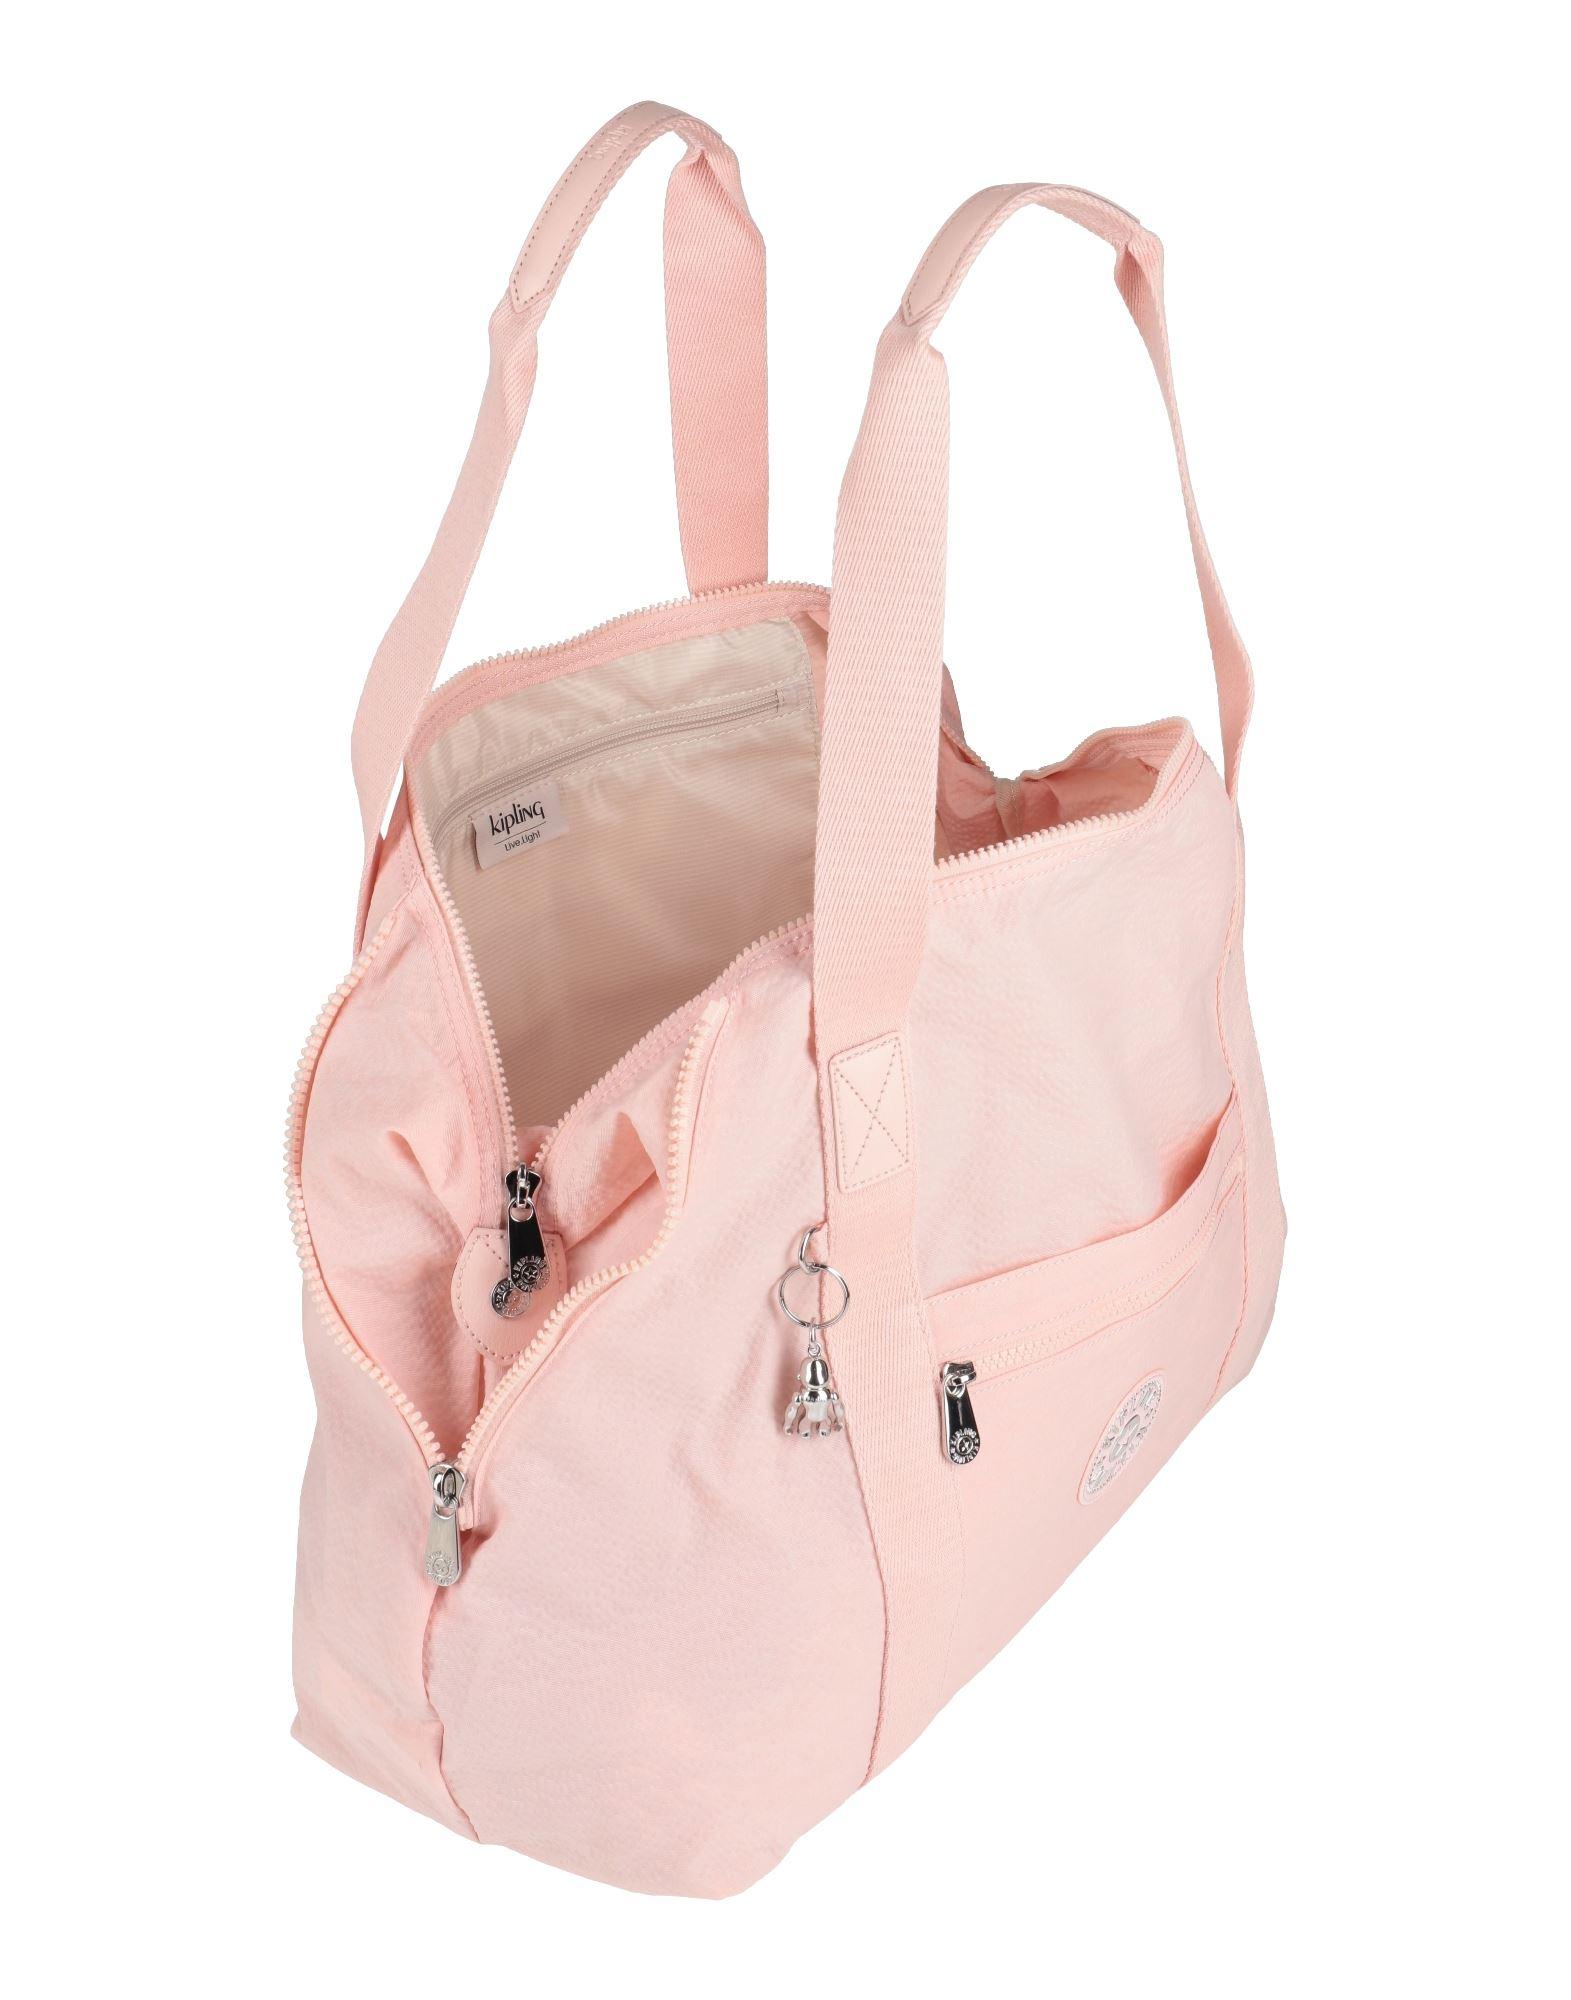 Kipling Callie Nylon Handbag Shoulder Crossbody Bag for sale online | eBay